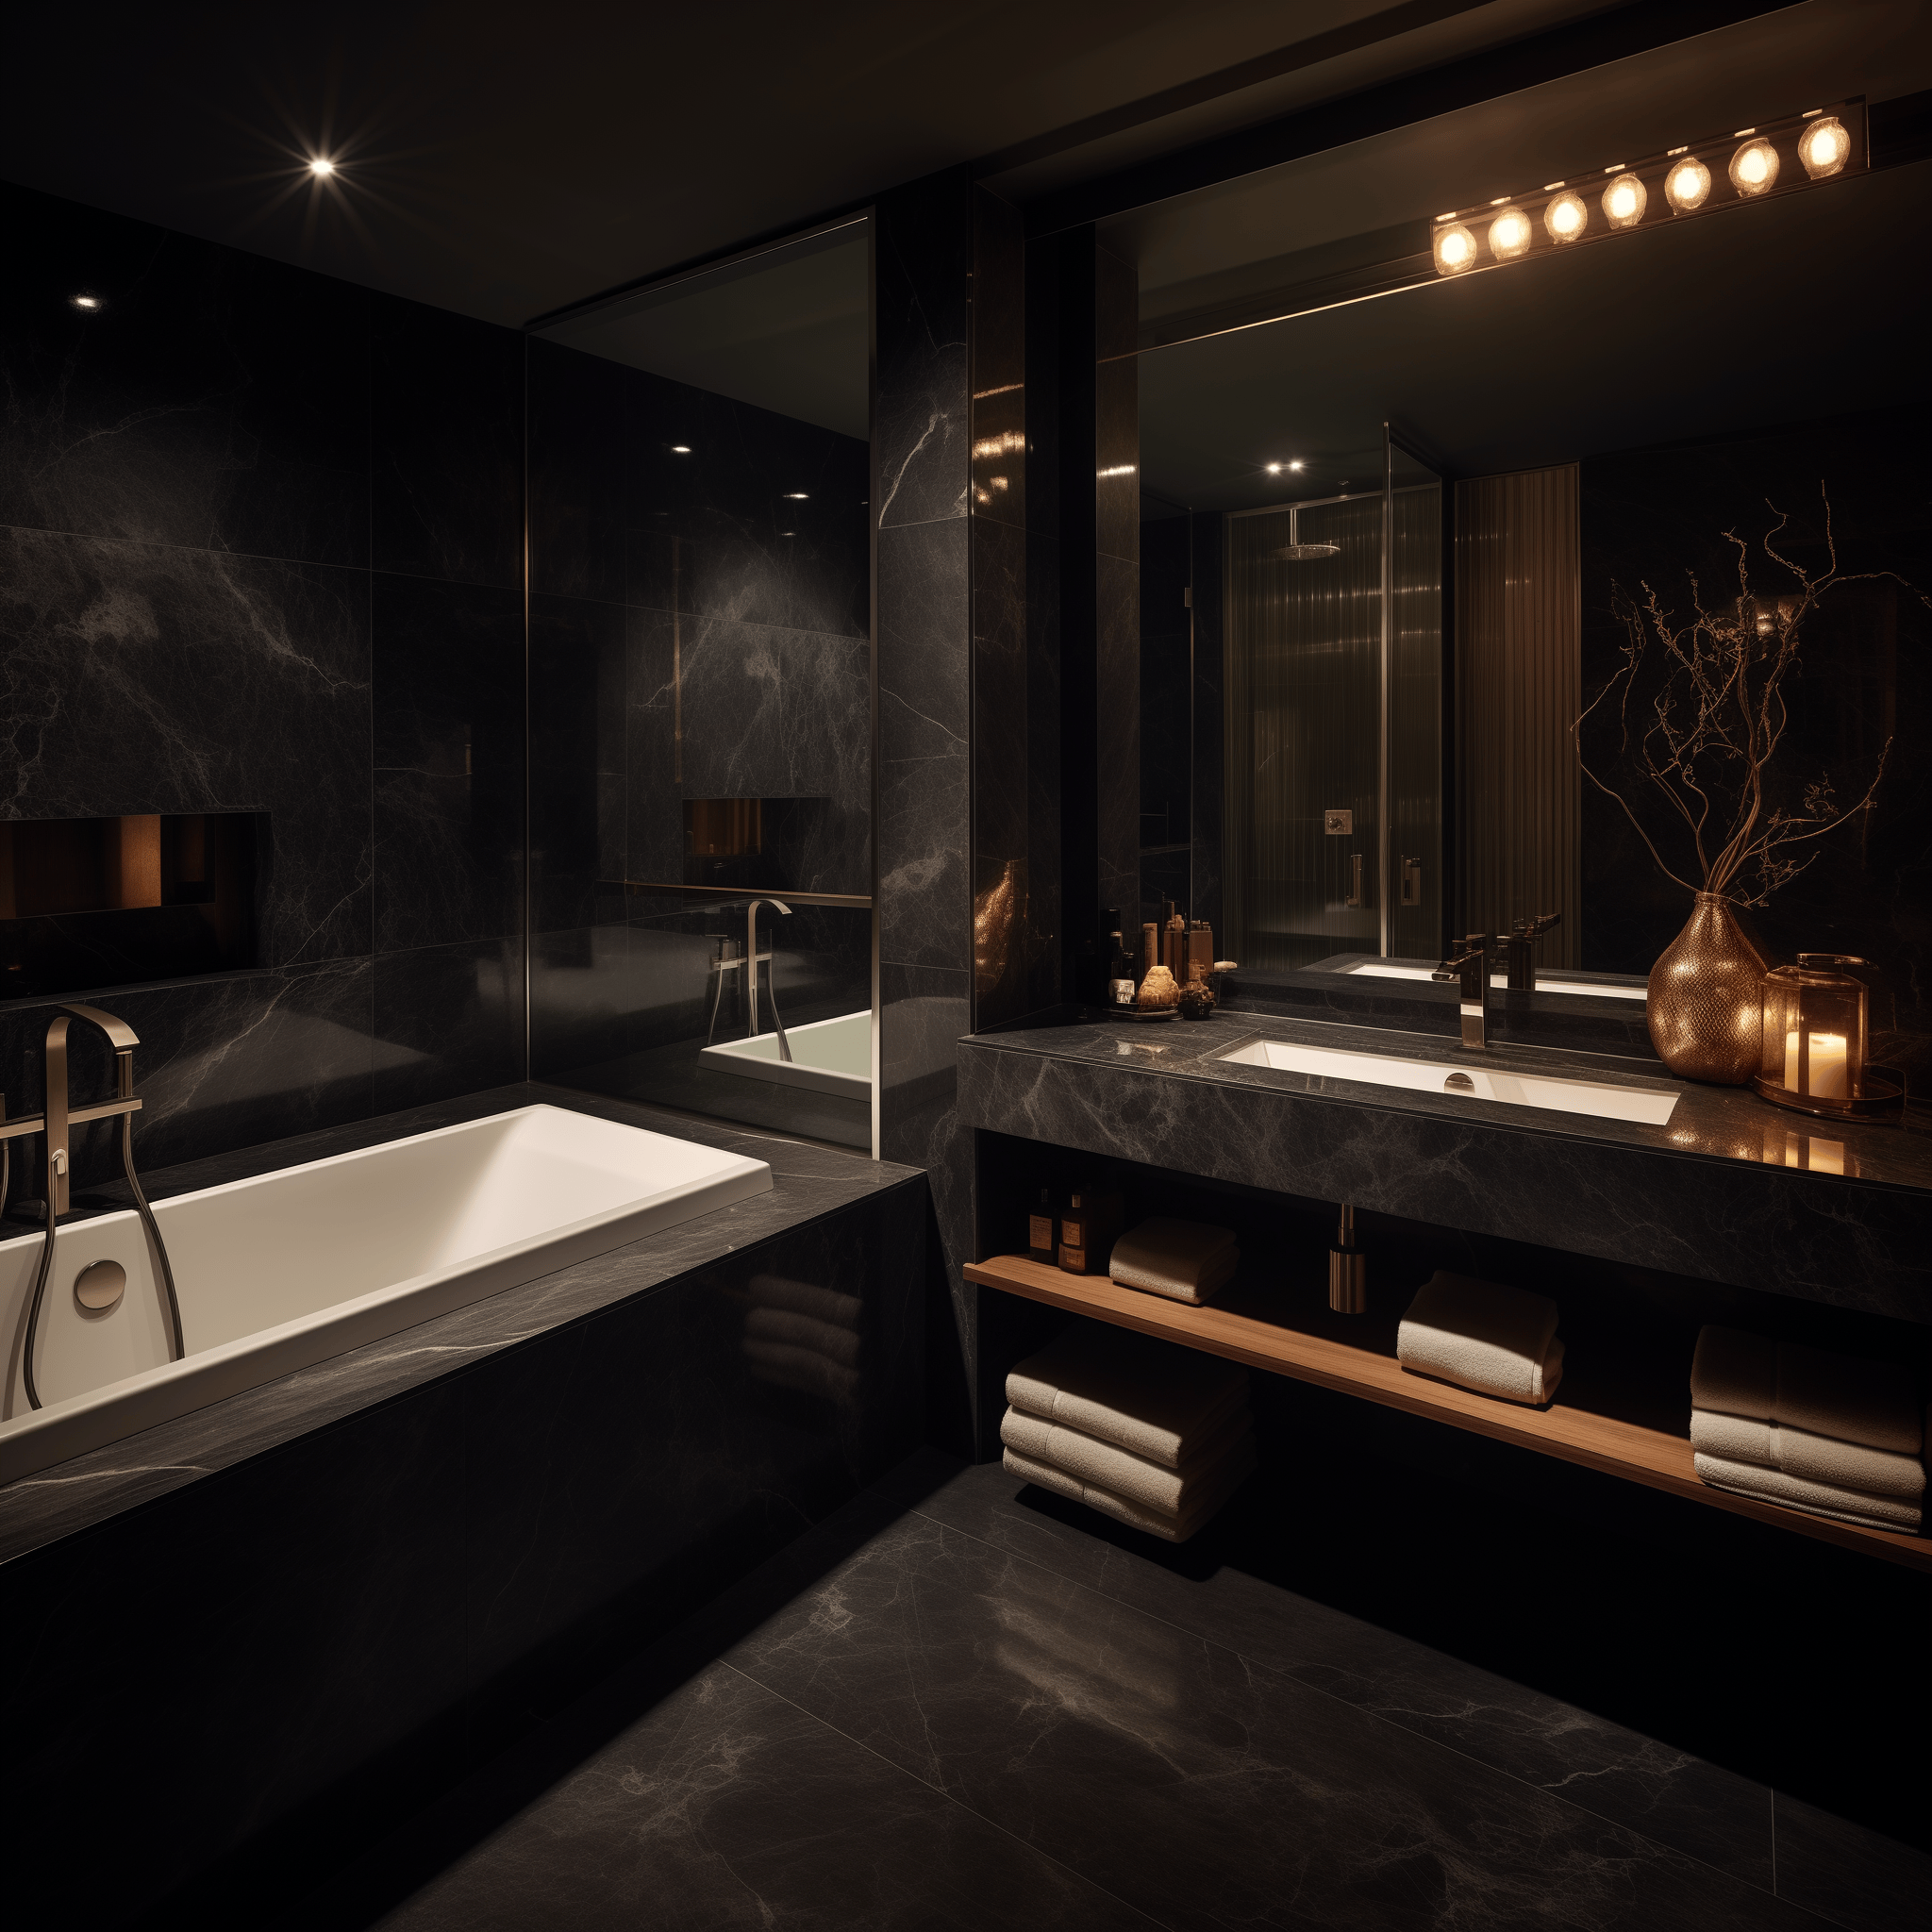 dark bathroom aesthetic decor design ideas luxury cozy colors